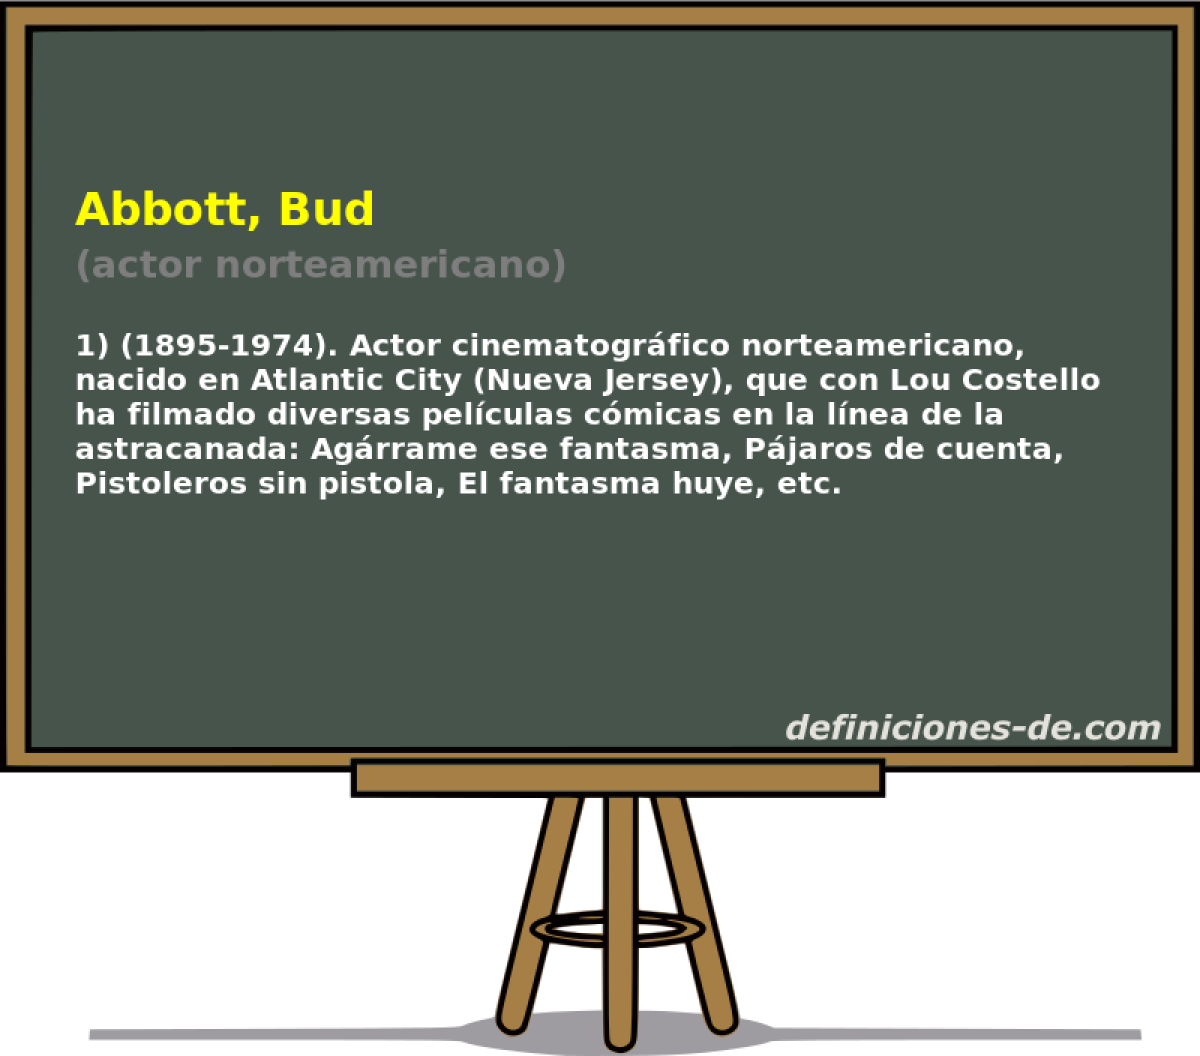 Abbott, Bud (actor norteamericano)